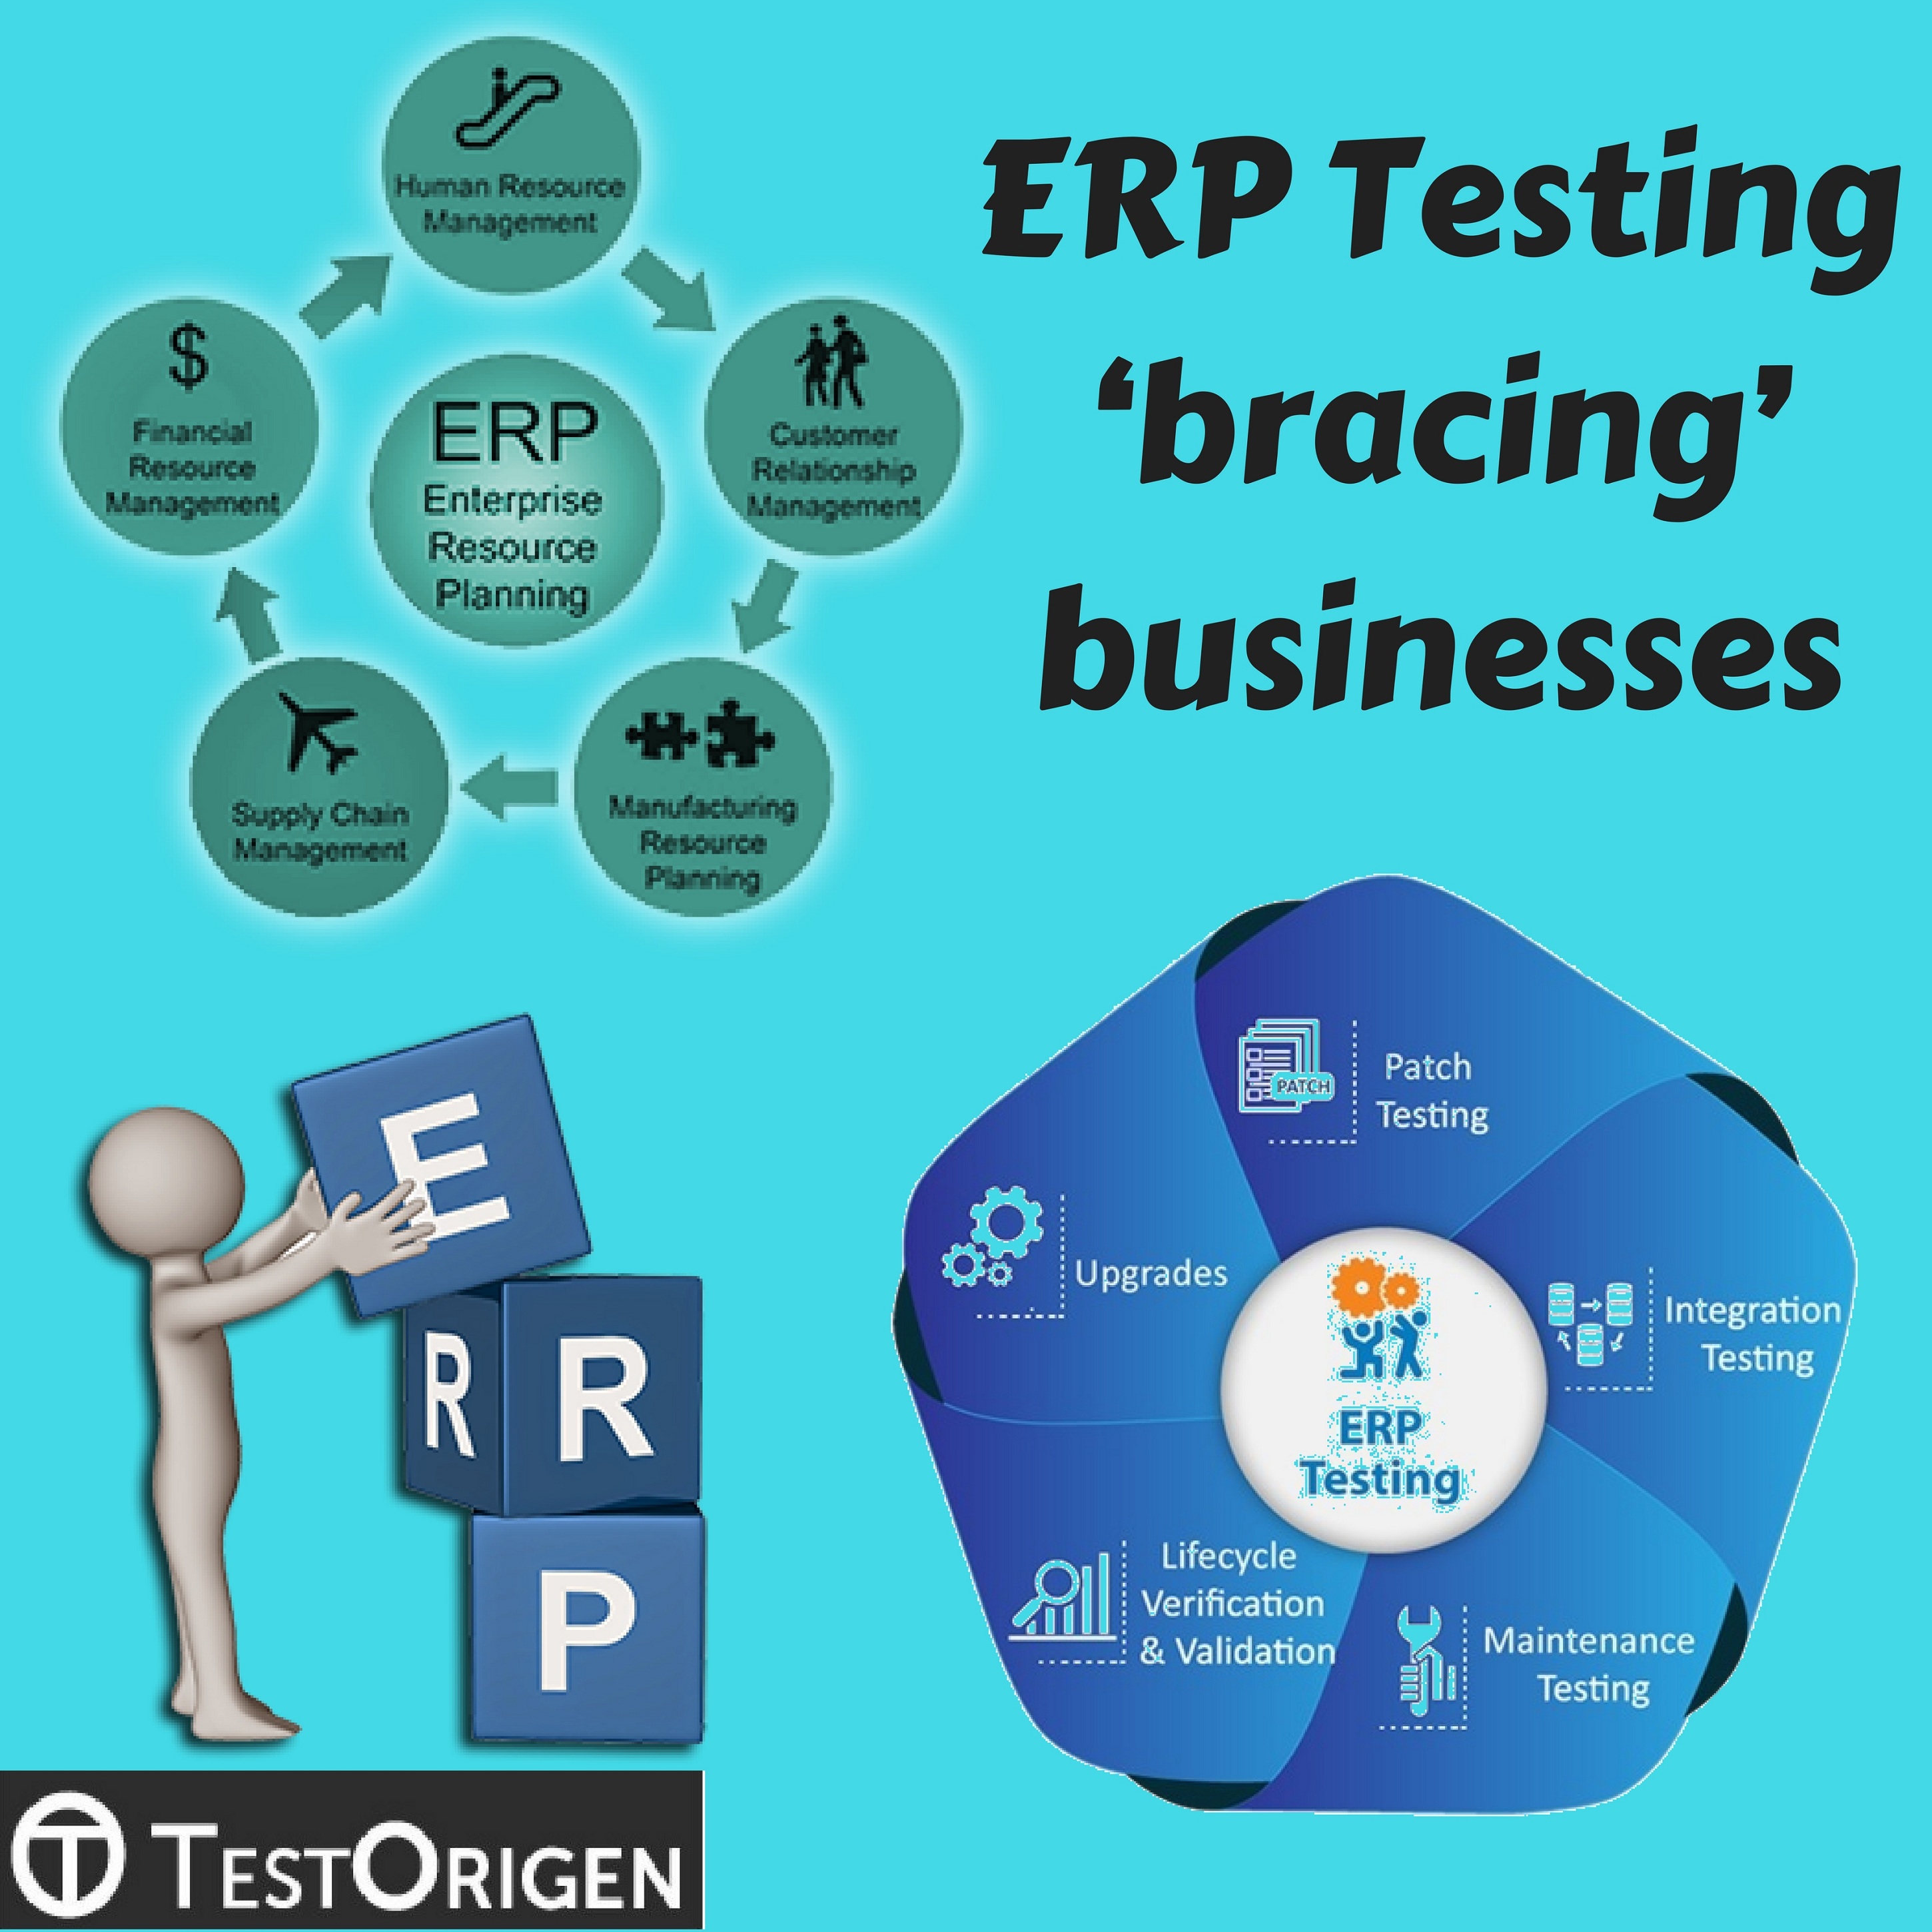 ERP Testing bracing businesses